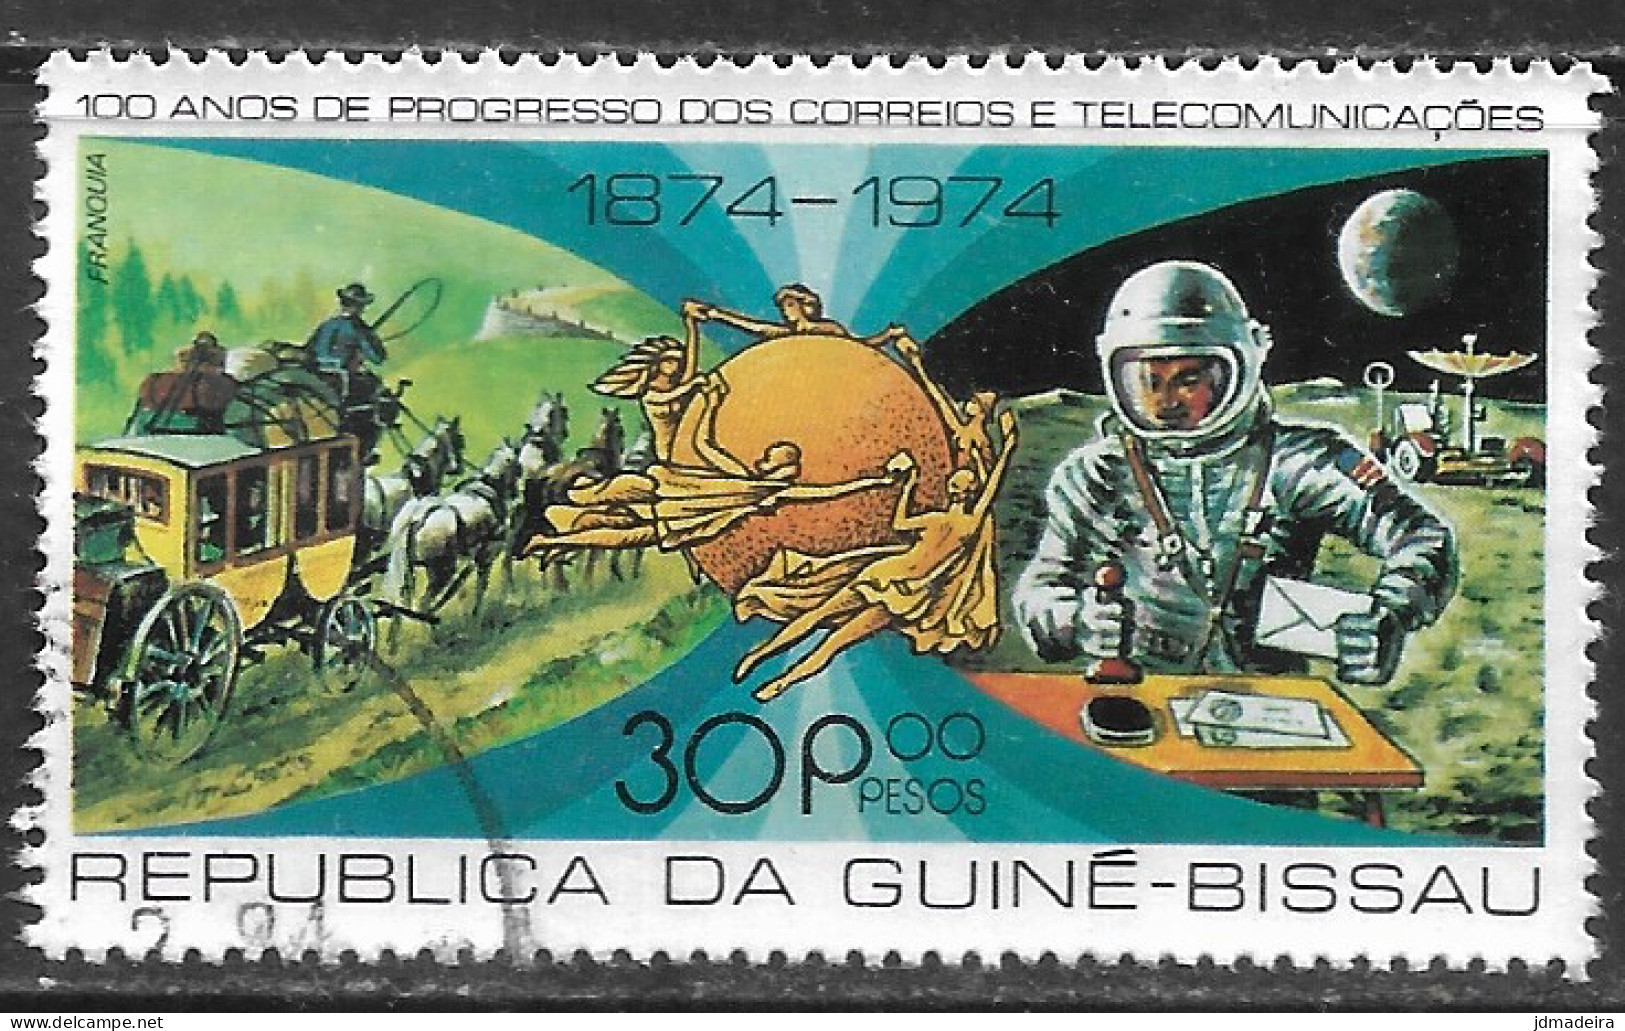 GUINE BISSAU – 1977 Mail And Telecoms Progress 30P00 Used Stamp - Guinea-Bissau